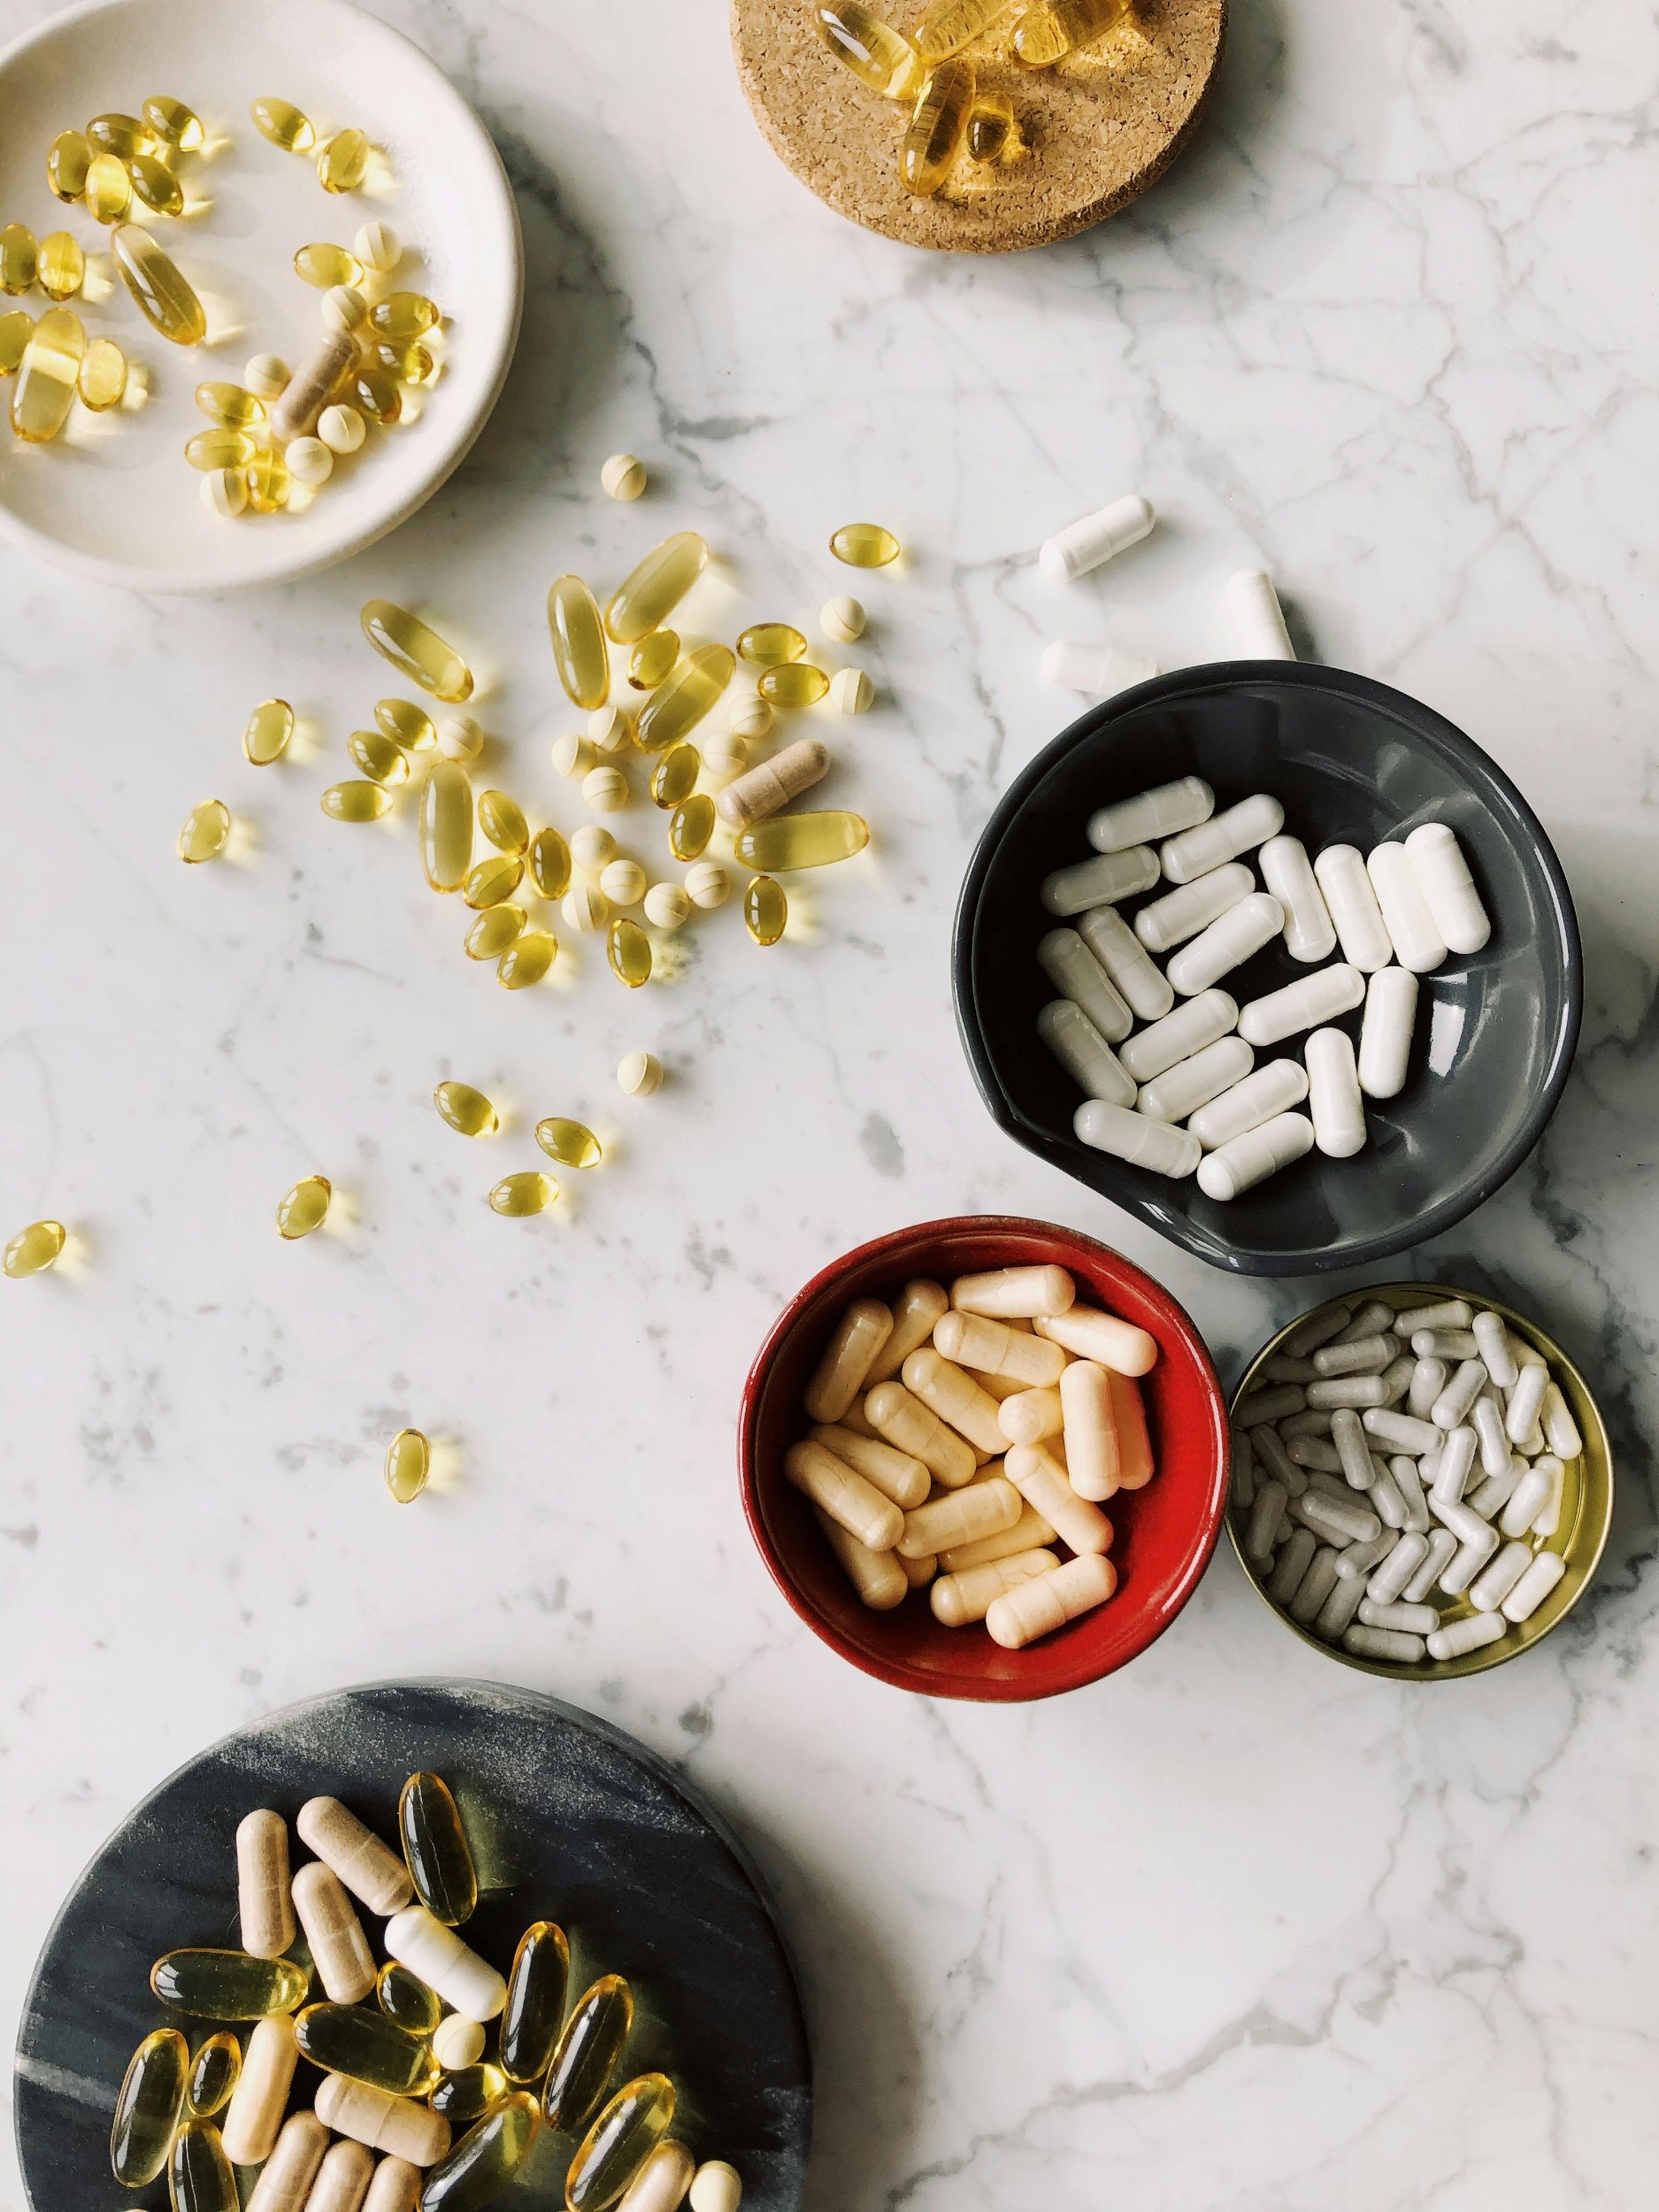 medications in bowls